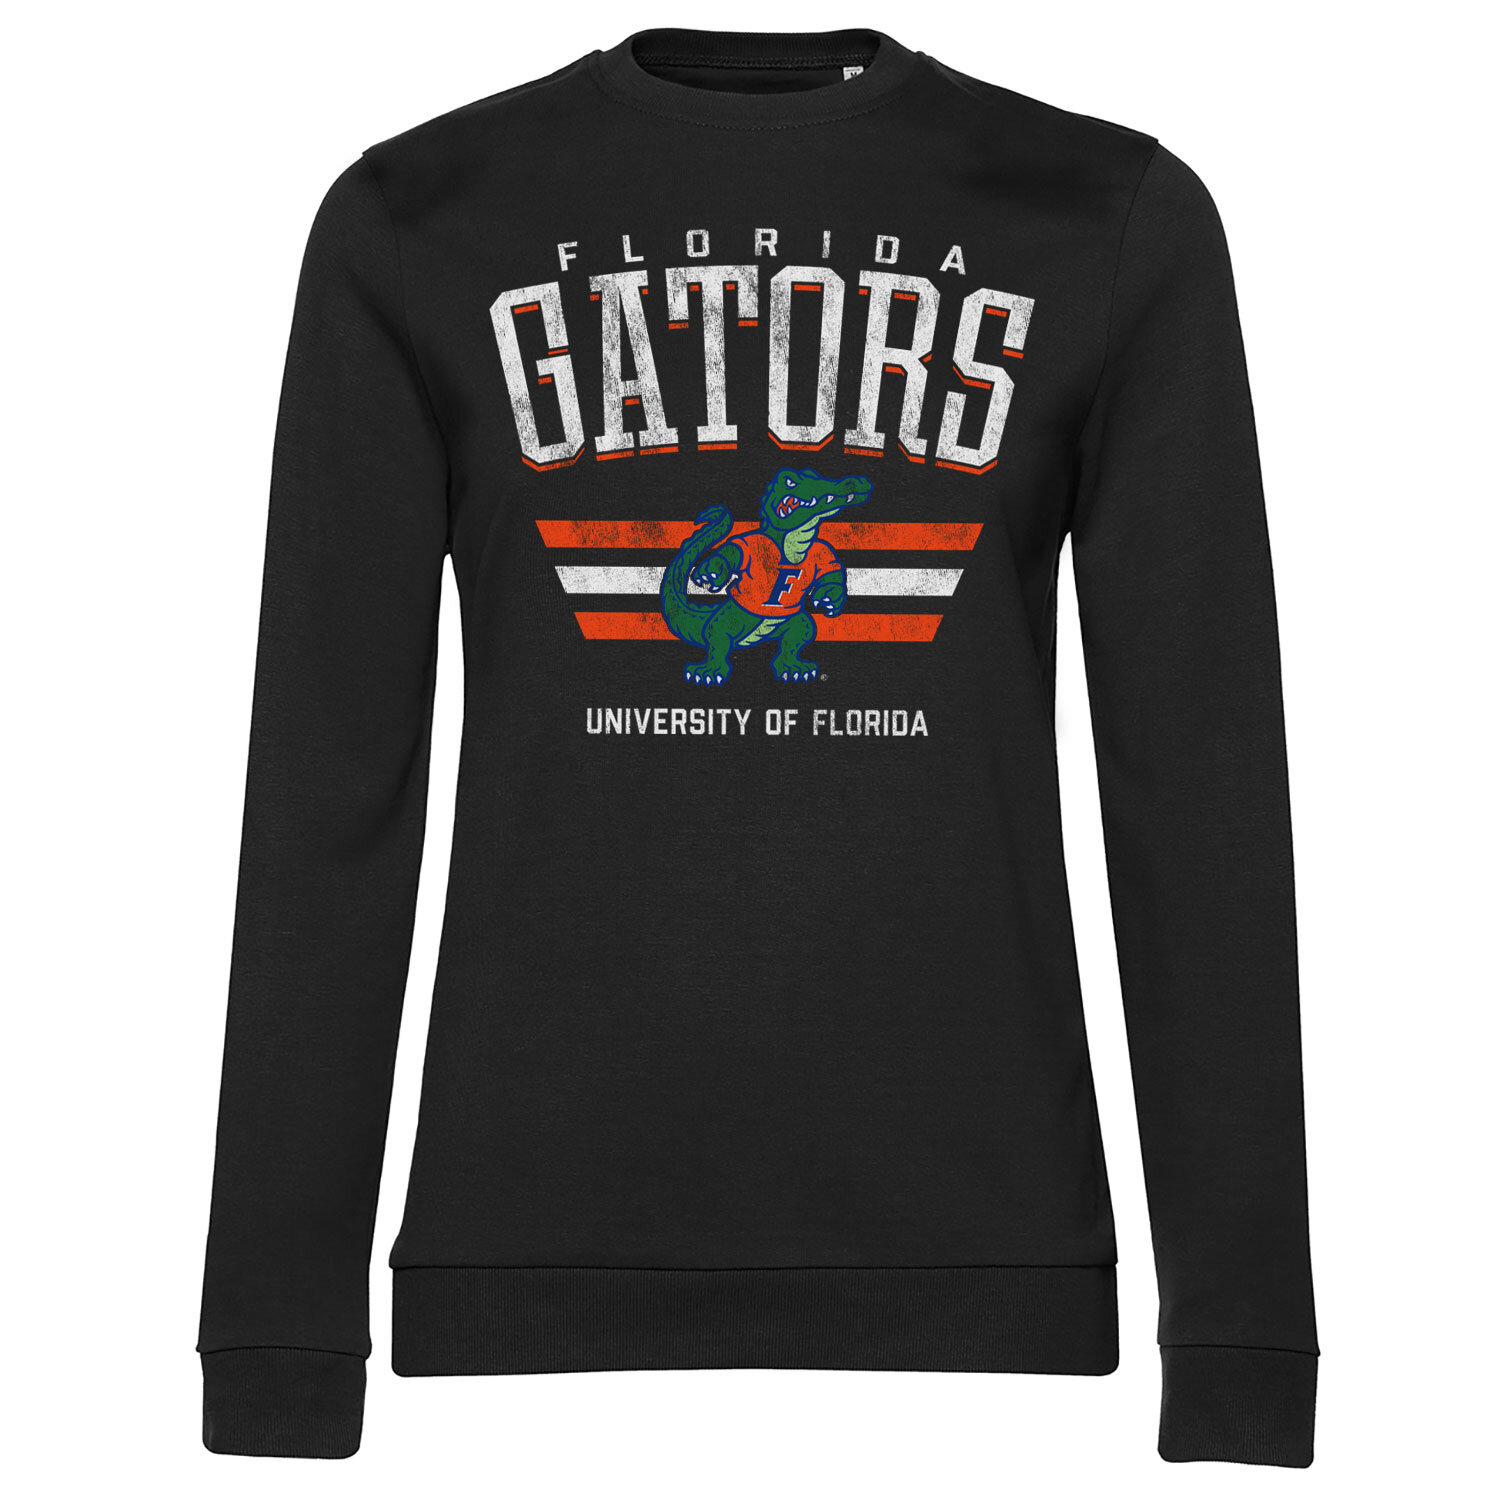 Florida Gators Vintage Girly Sweatshirt